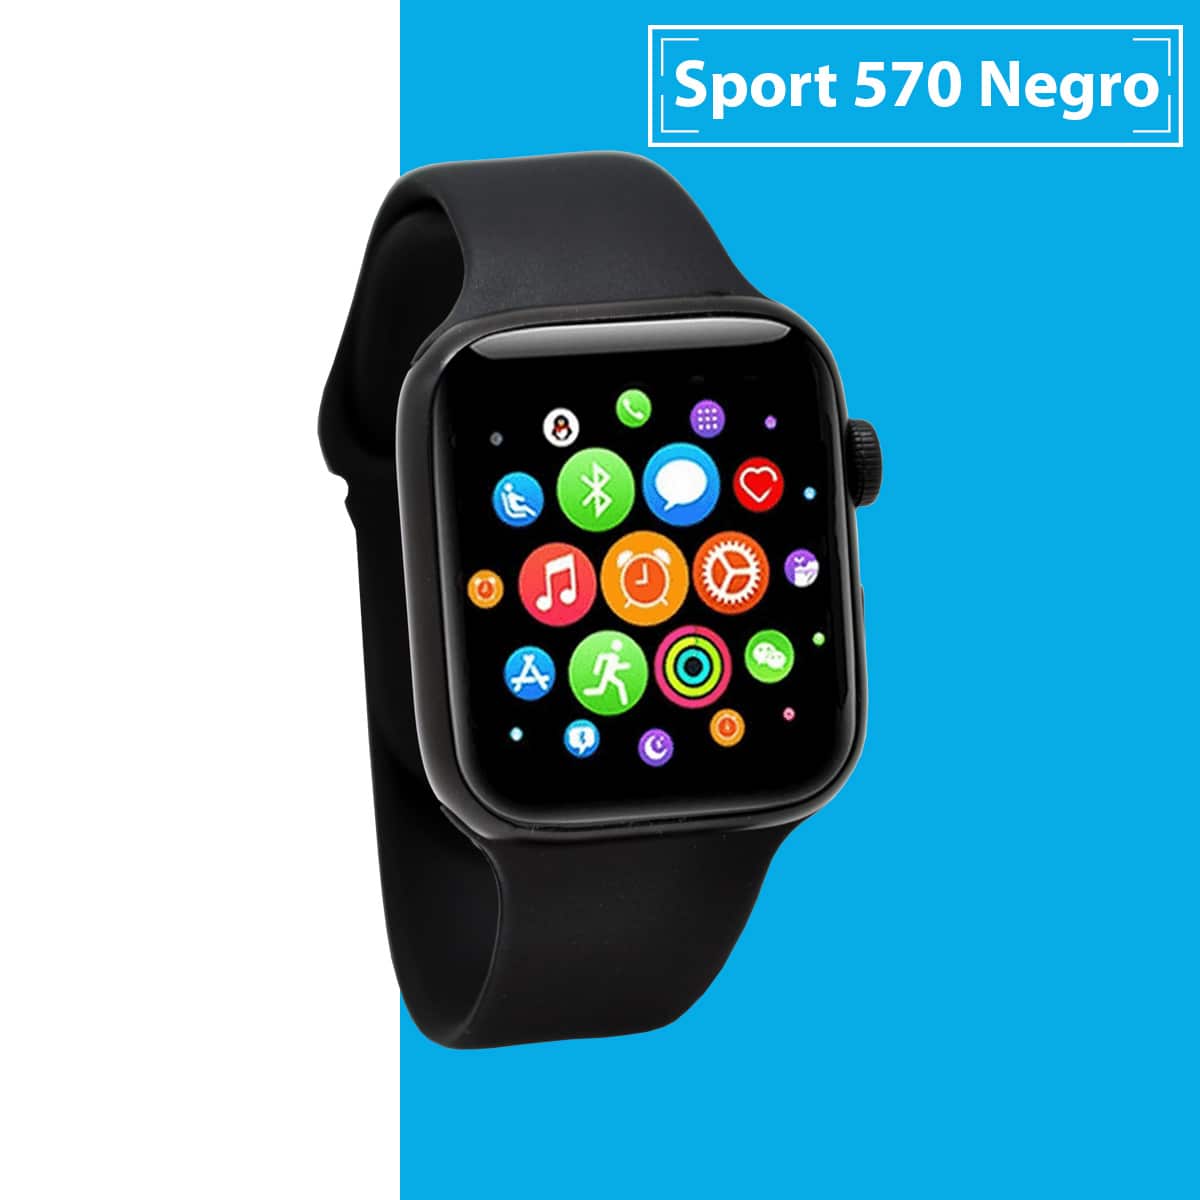 Sport570-Negro-1